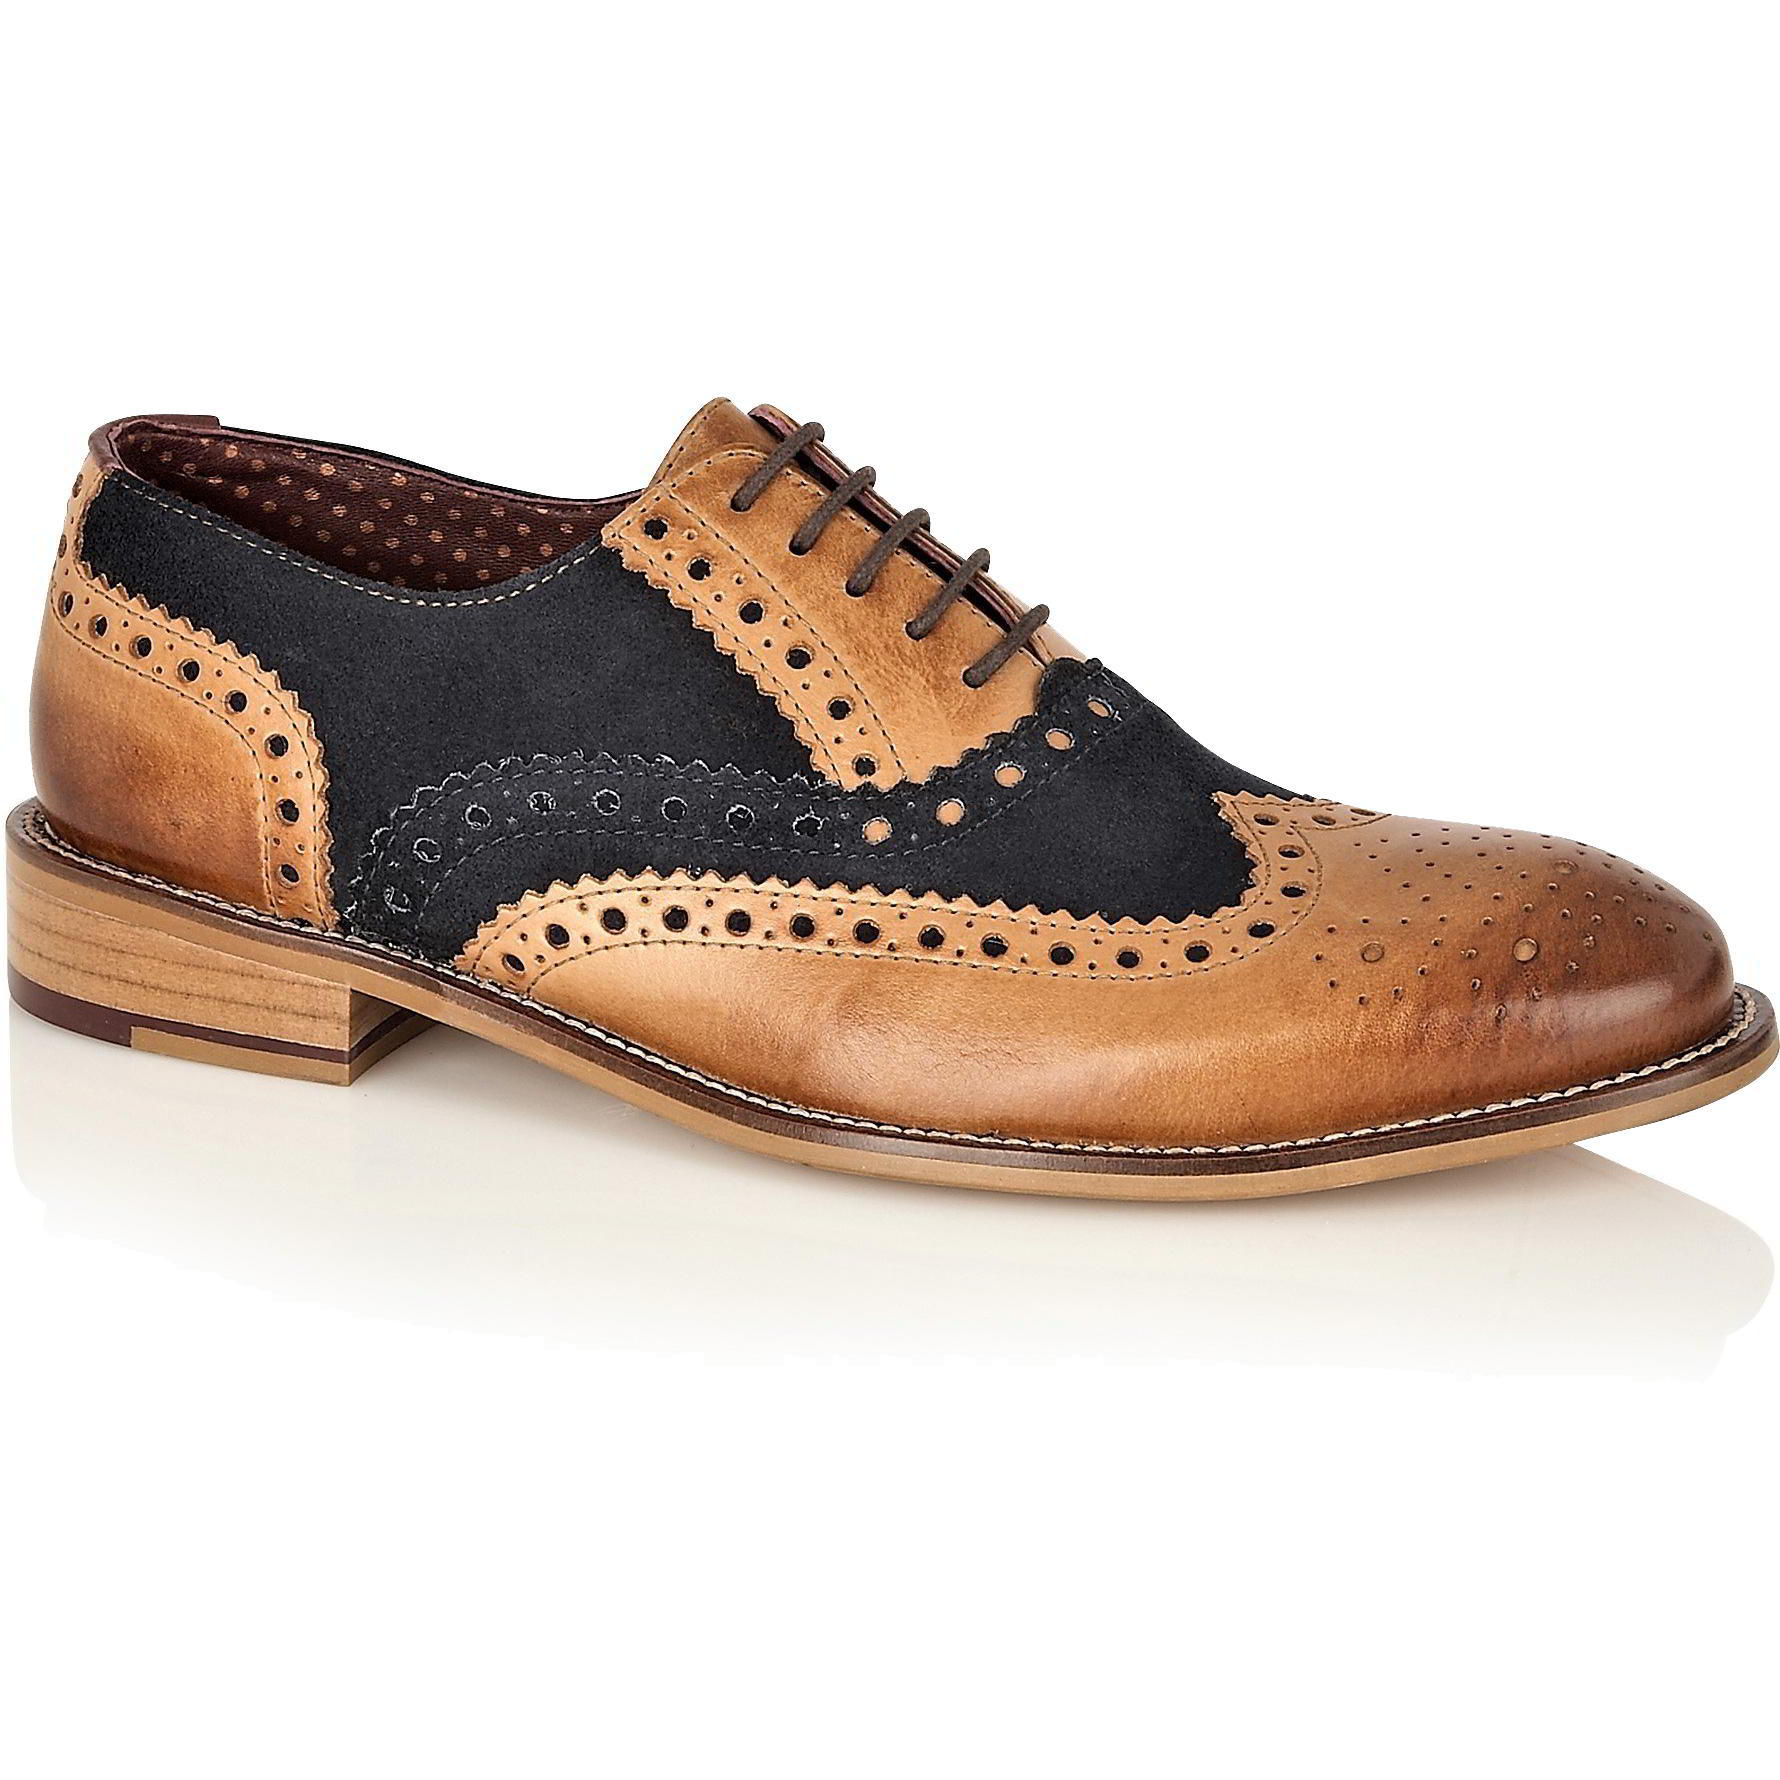 London Brogues Men's Gatsby Leather Wingtip Brogue Shoes - UK 11